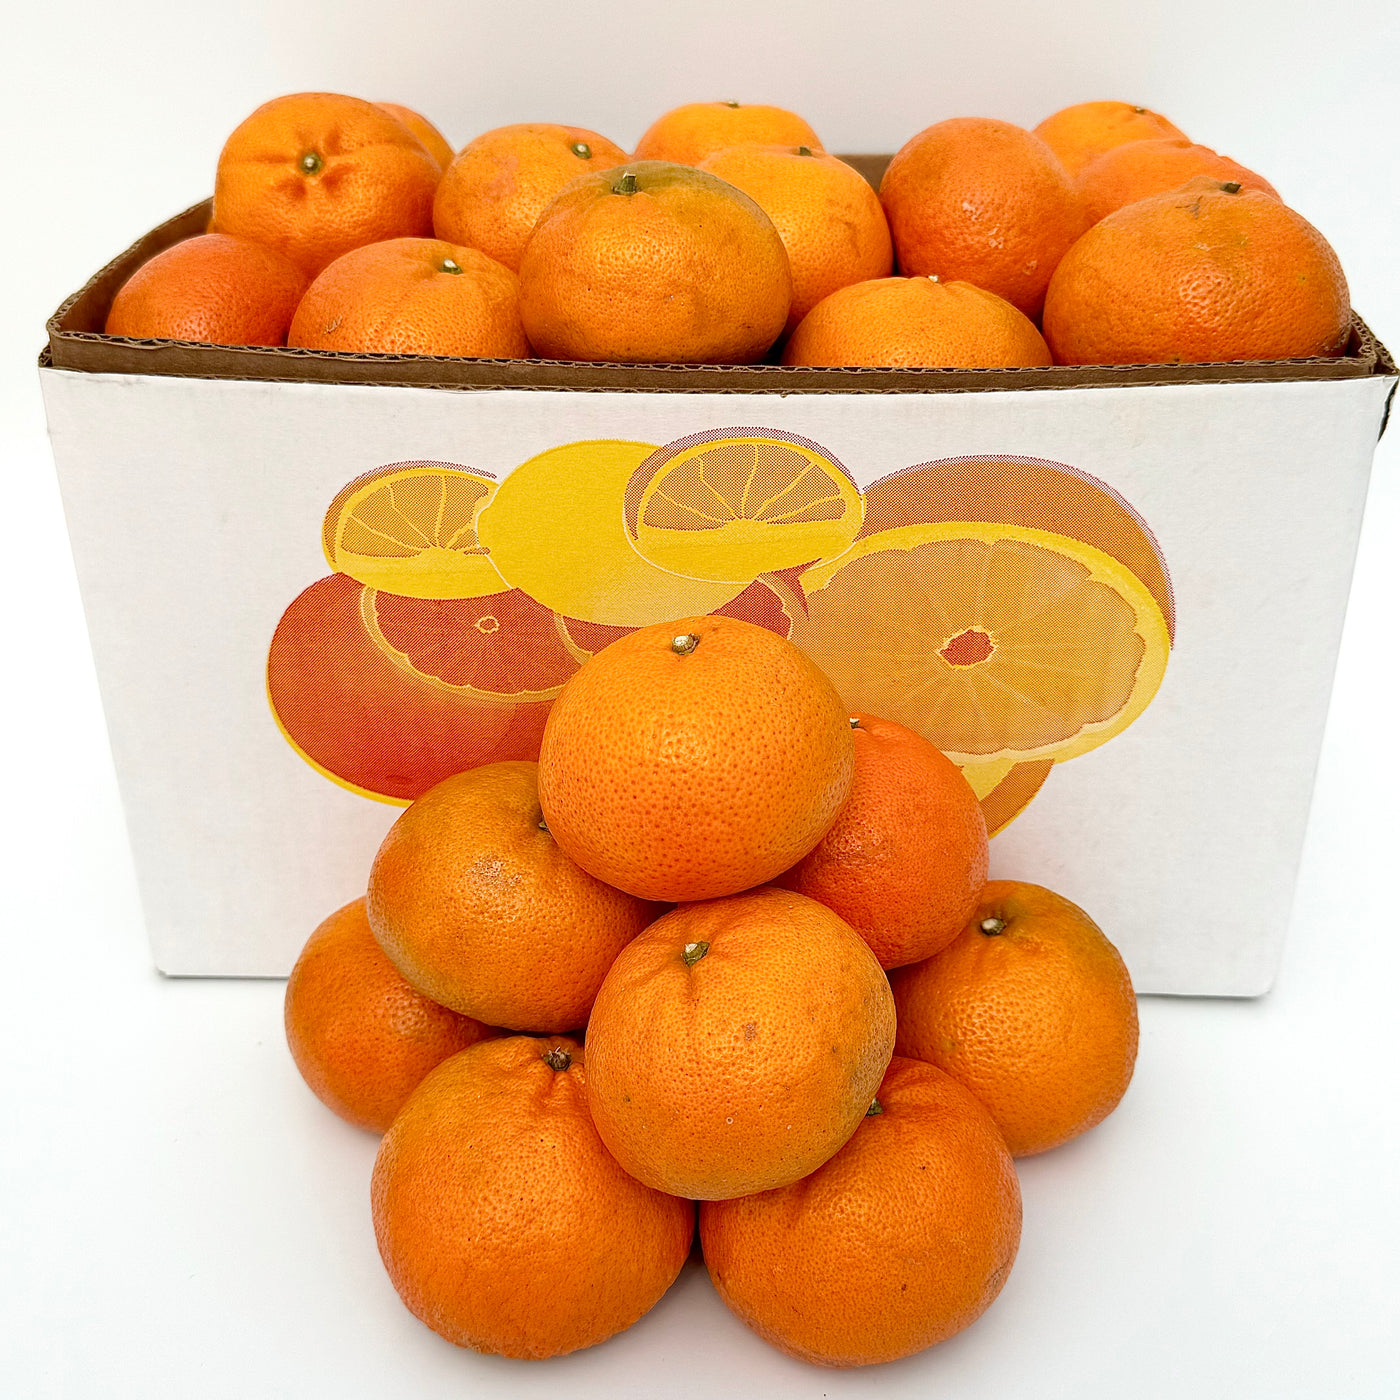 The Clementine Tangerine Box